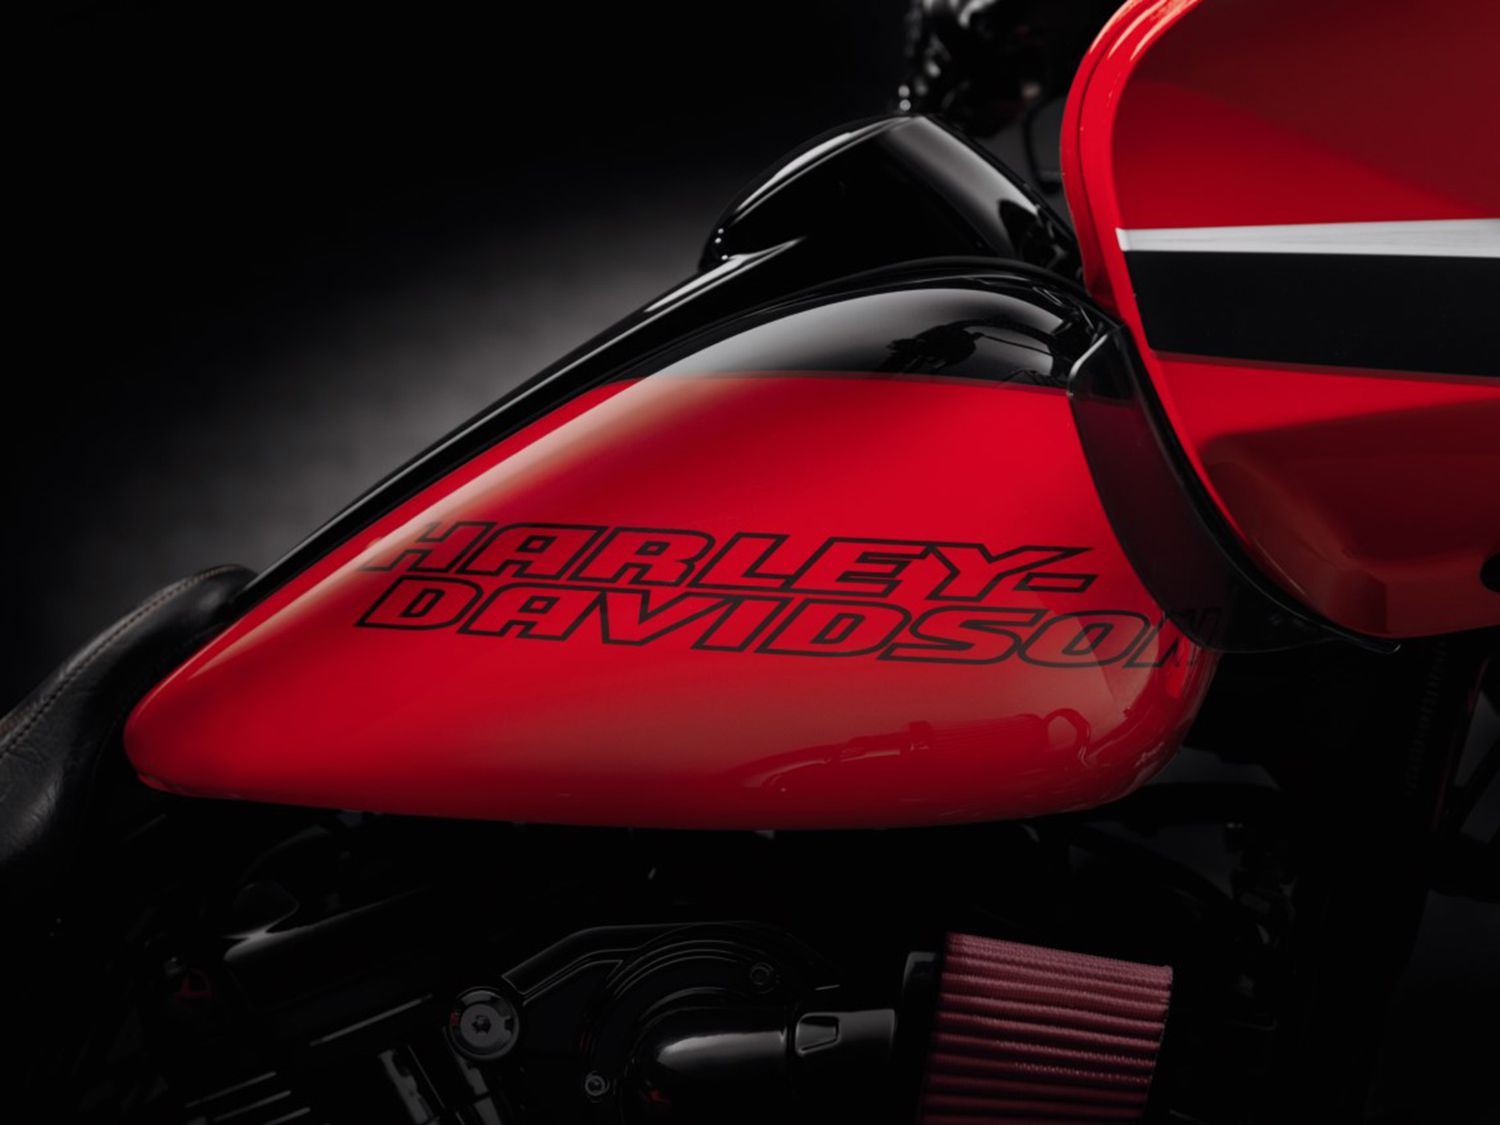 2020 Harley-Davidson Custom Paint Lineup | Cycle World